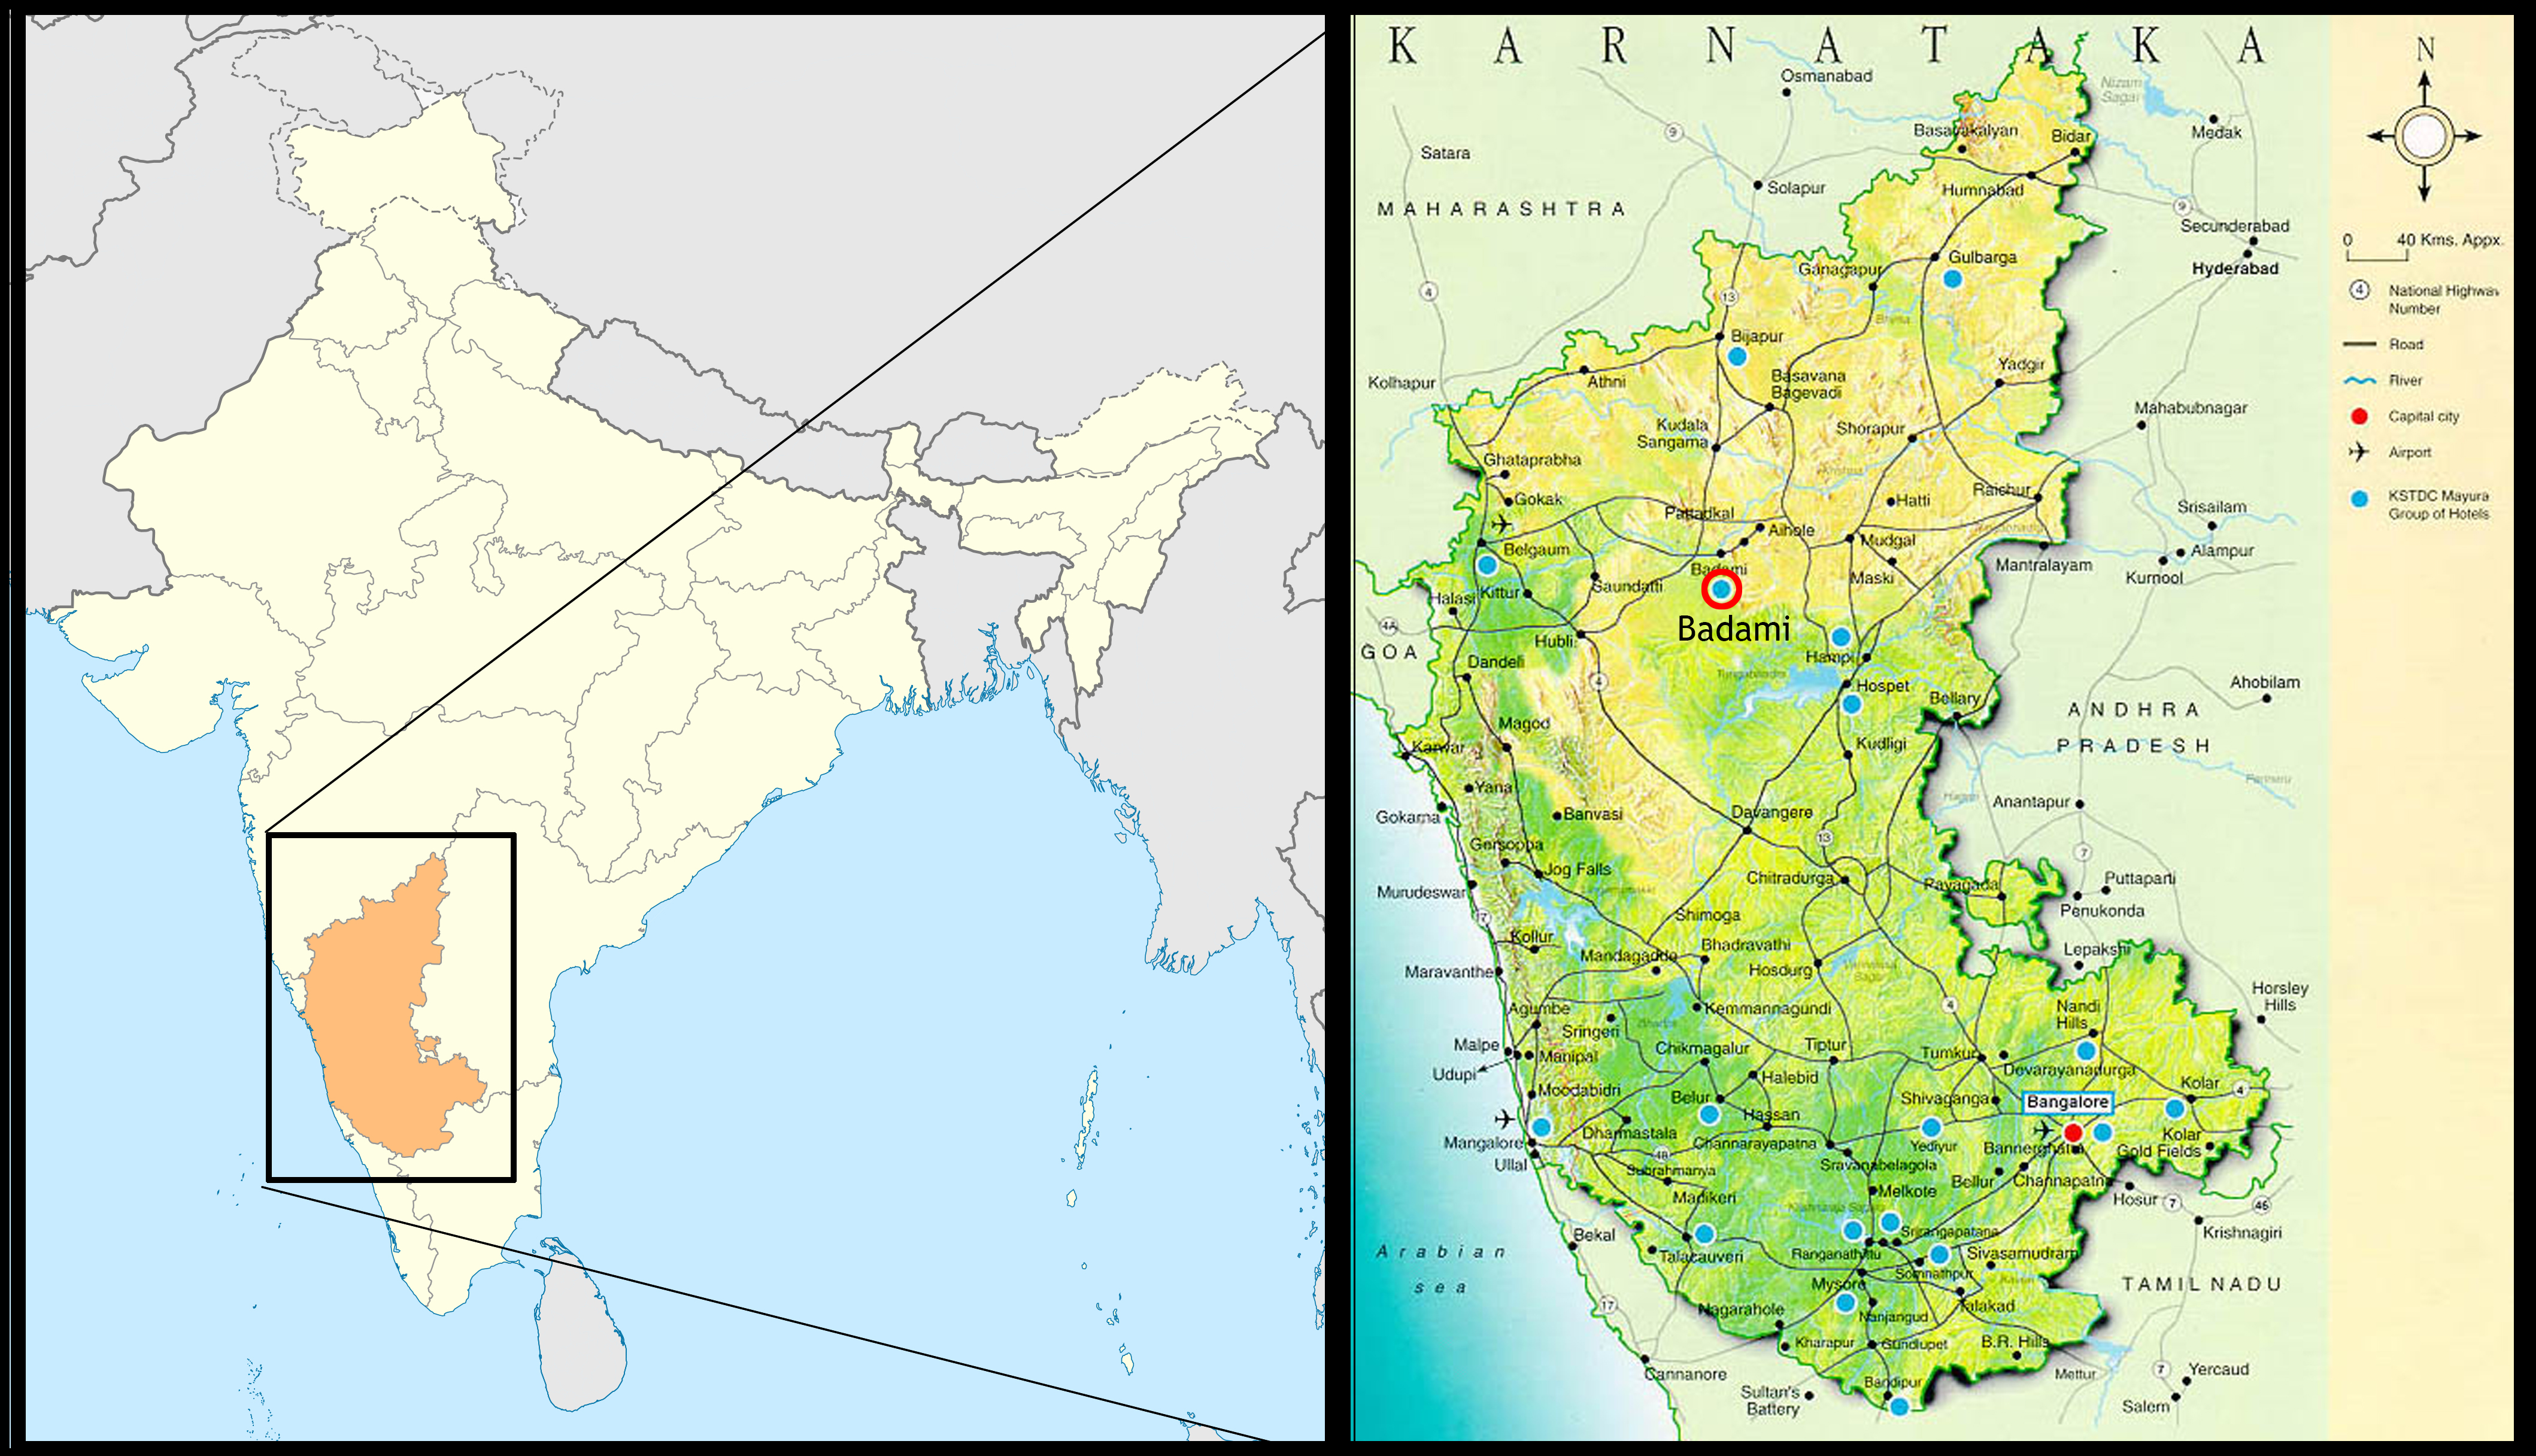 https://upload.wikimedia.org/wikipedia/commons/a/ac/India_Karnat